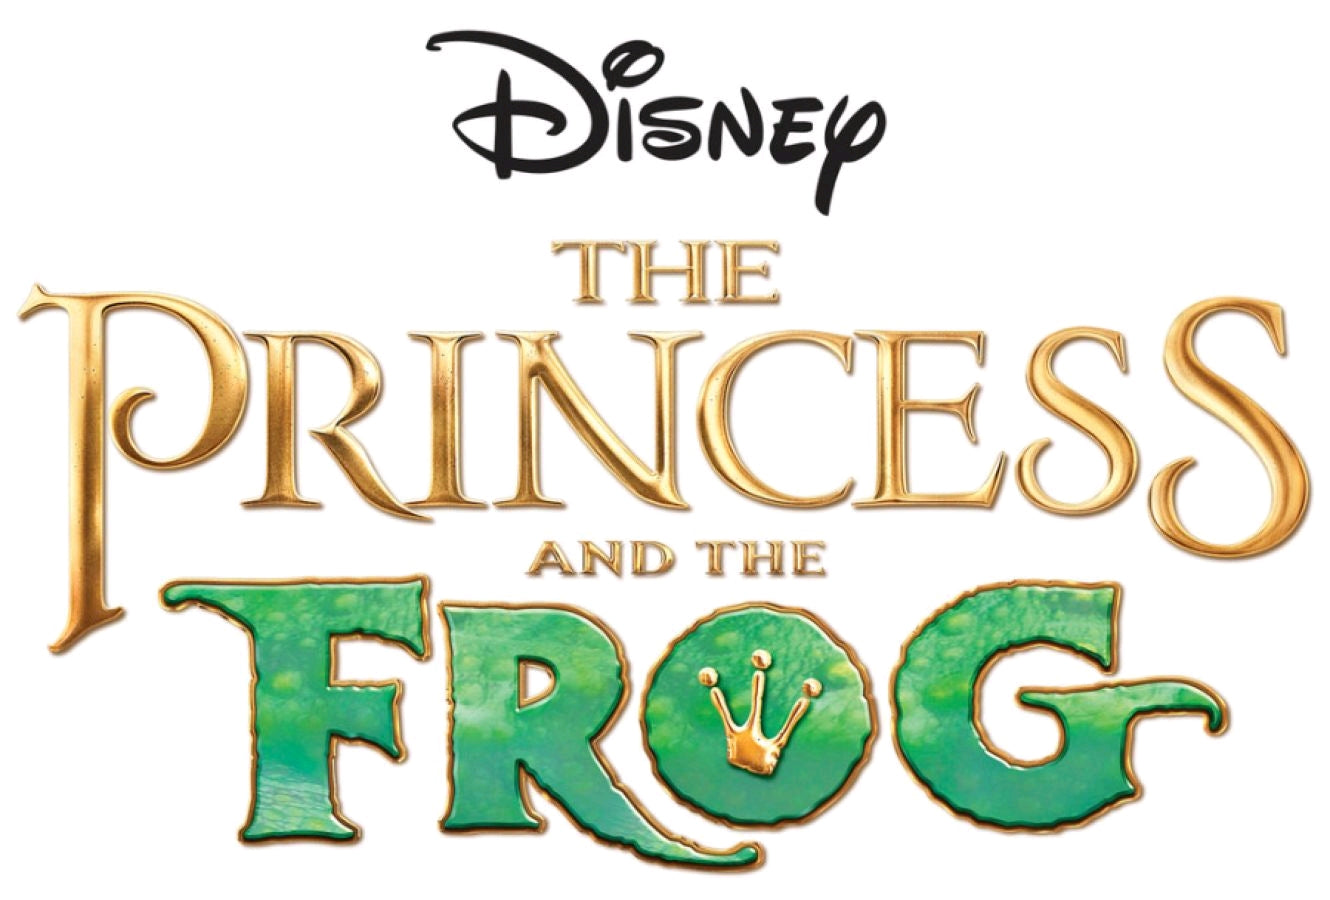 The Princess and the Frog - Tiana Ultimate Princess Pop! Vinyl